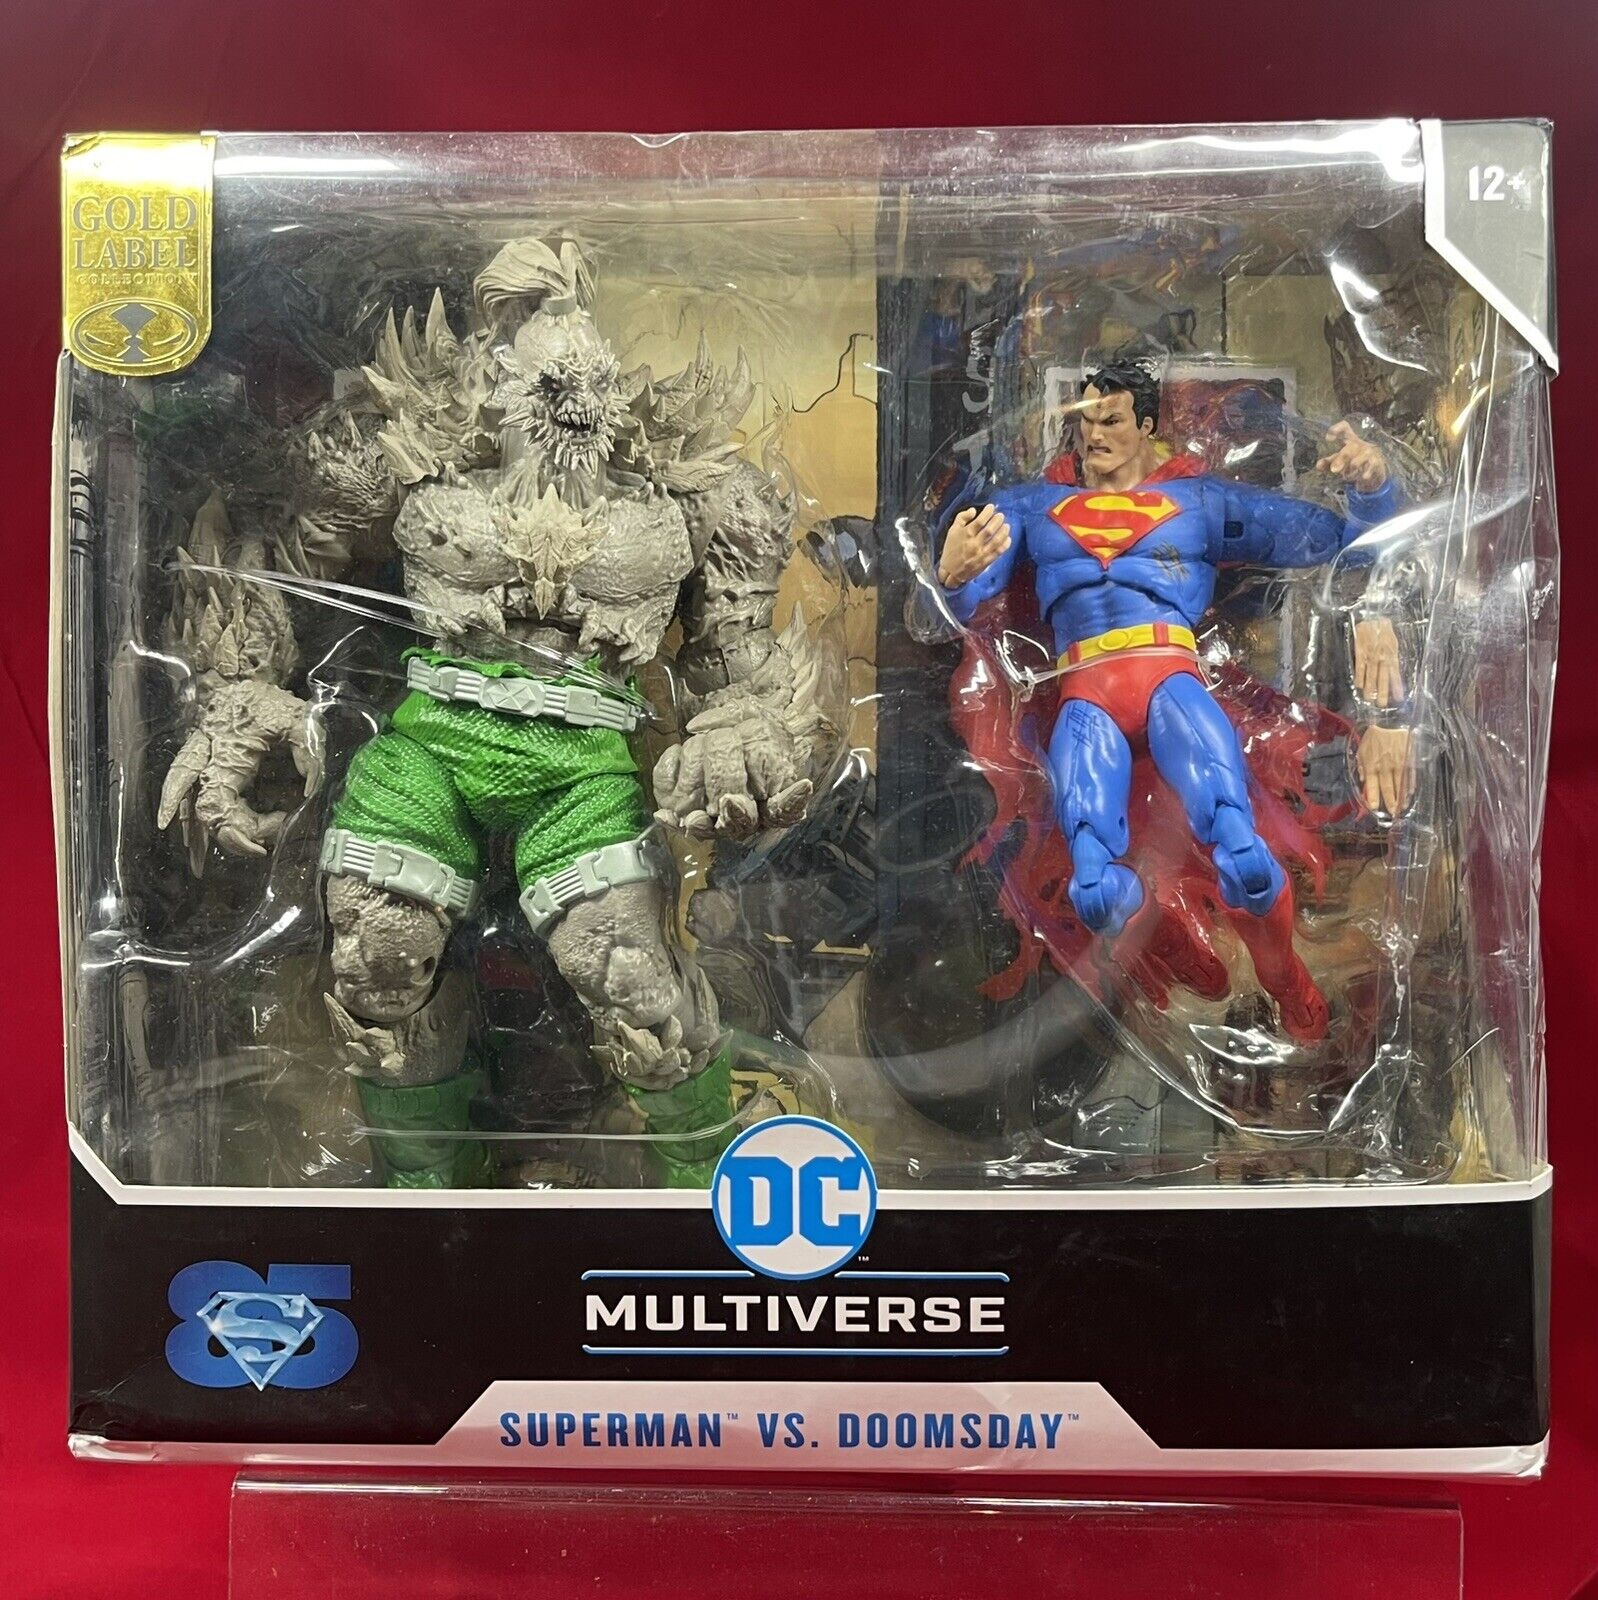 Nice McFarlane DC Multiverse SUPERMAN VS DOOMSDAY McFarlane Gold Label Boxed Set on eBay